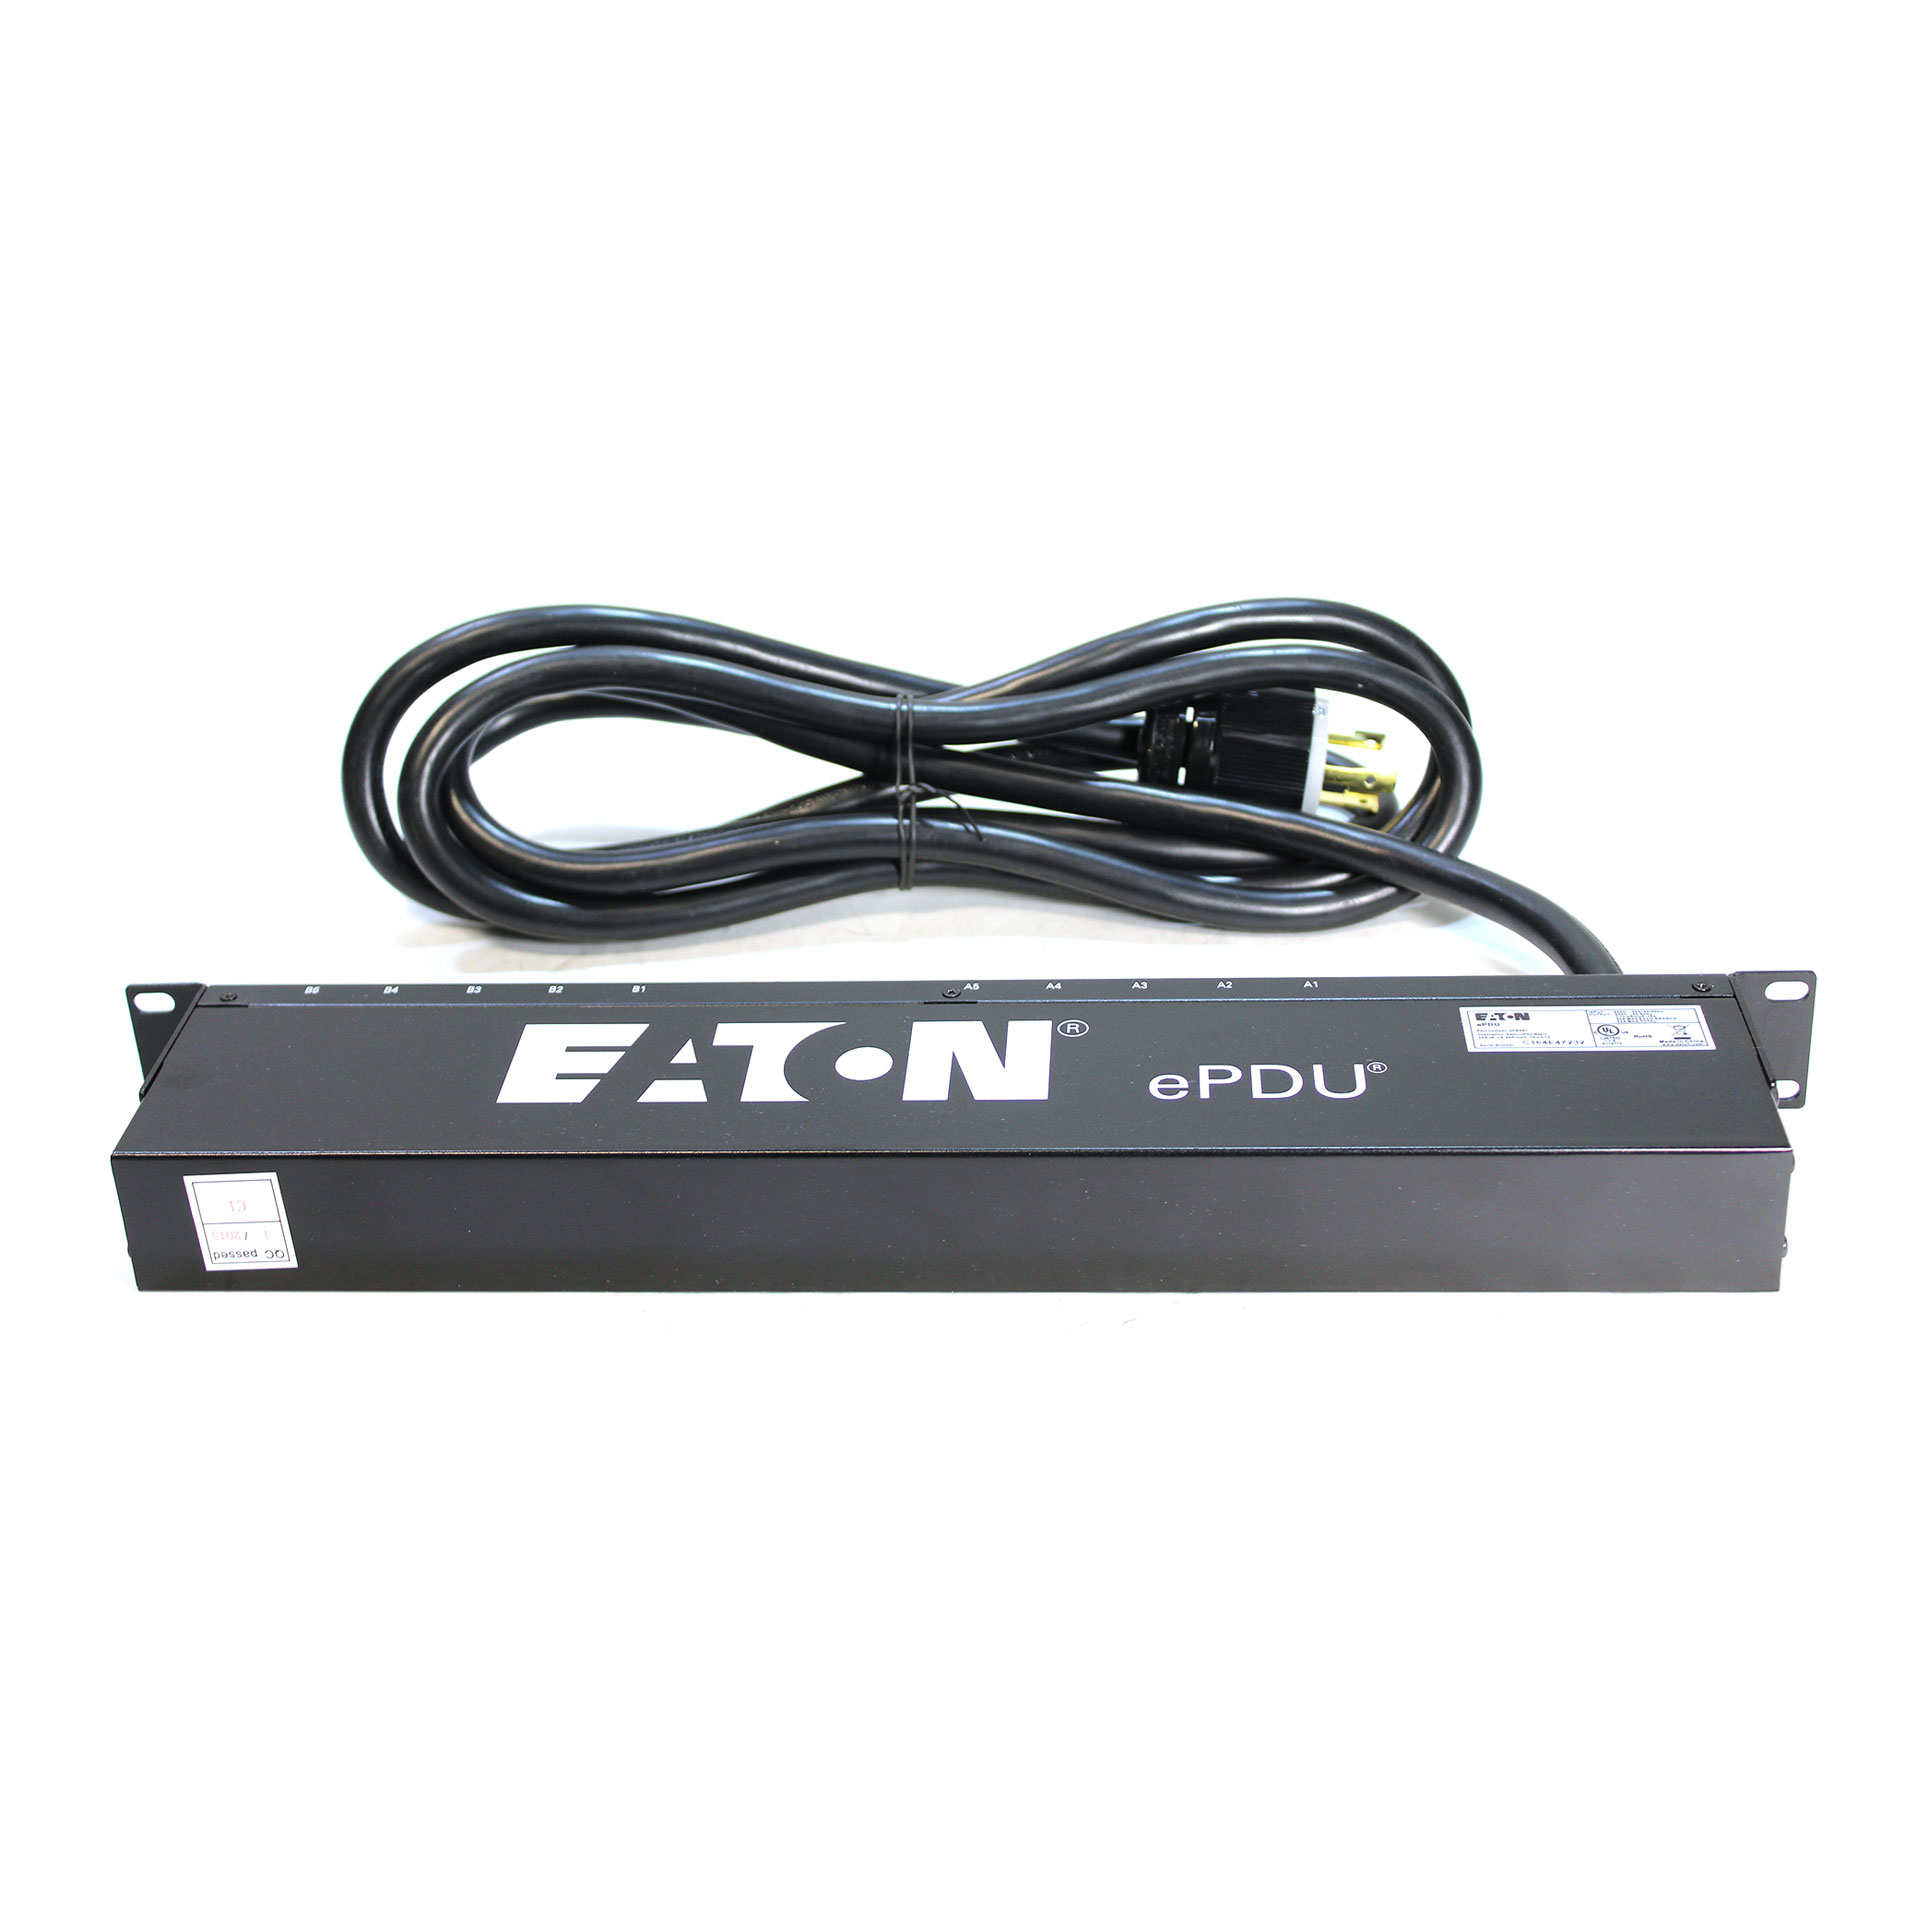 Eaton EPBZ91 ePDU Basic Power Distribution Unit 4.99kW#